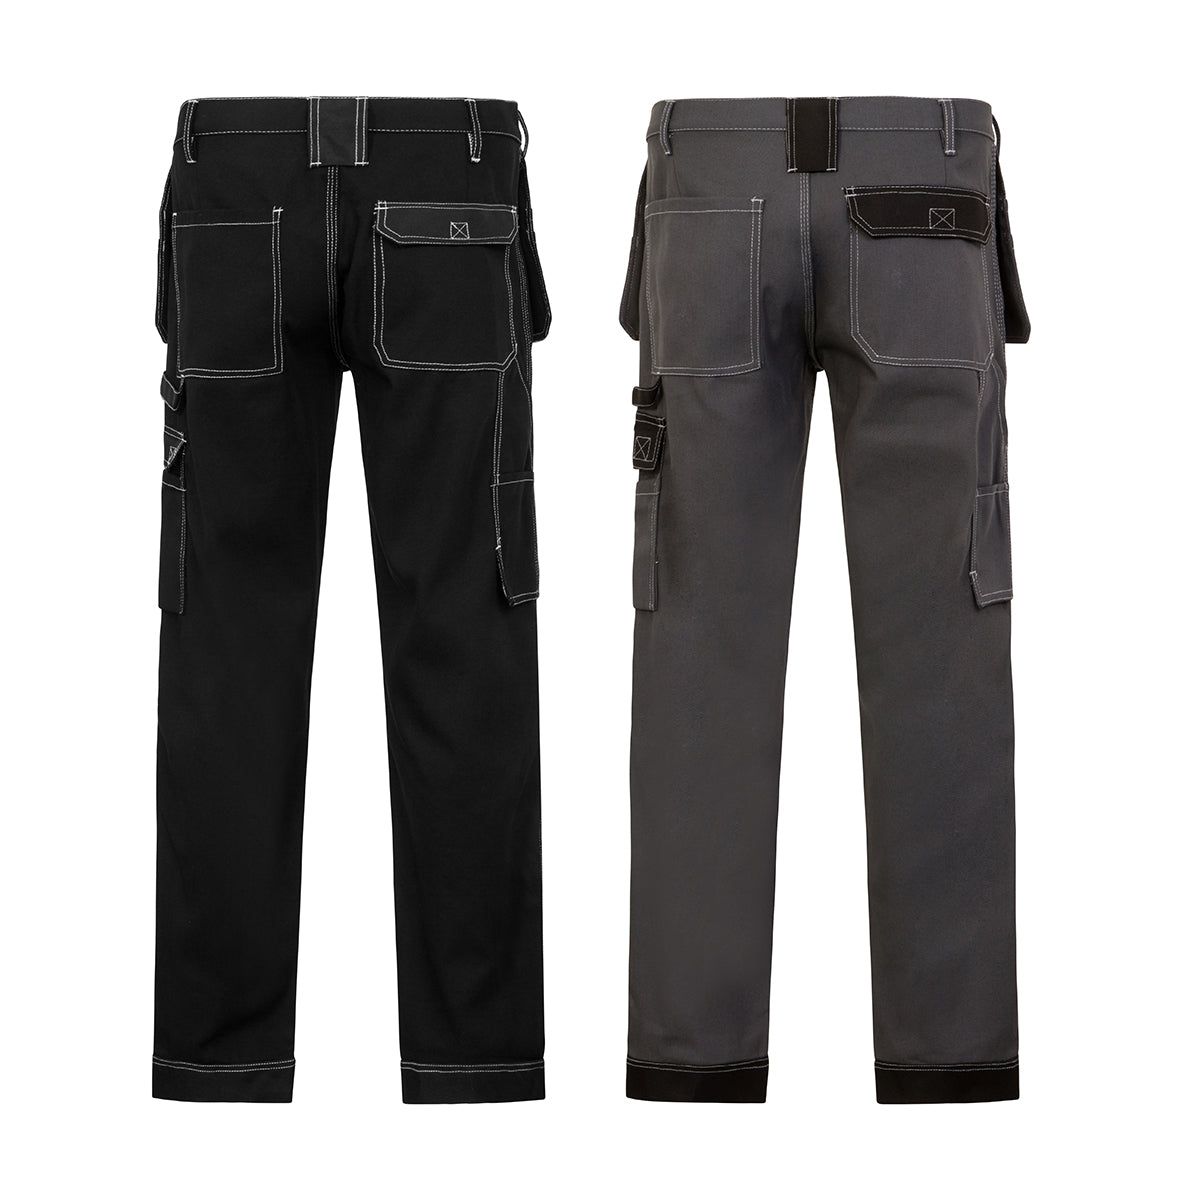 Mens Black Cargo Combat Work Pants Knee Pad Pocket Heavy Duty Utility  Trousers | eBay